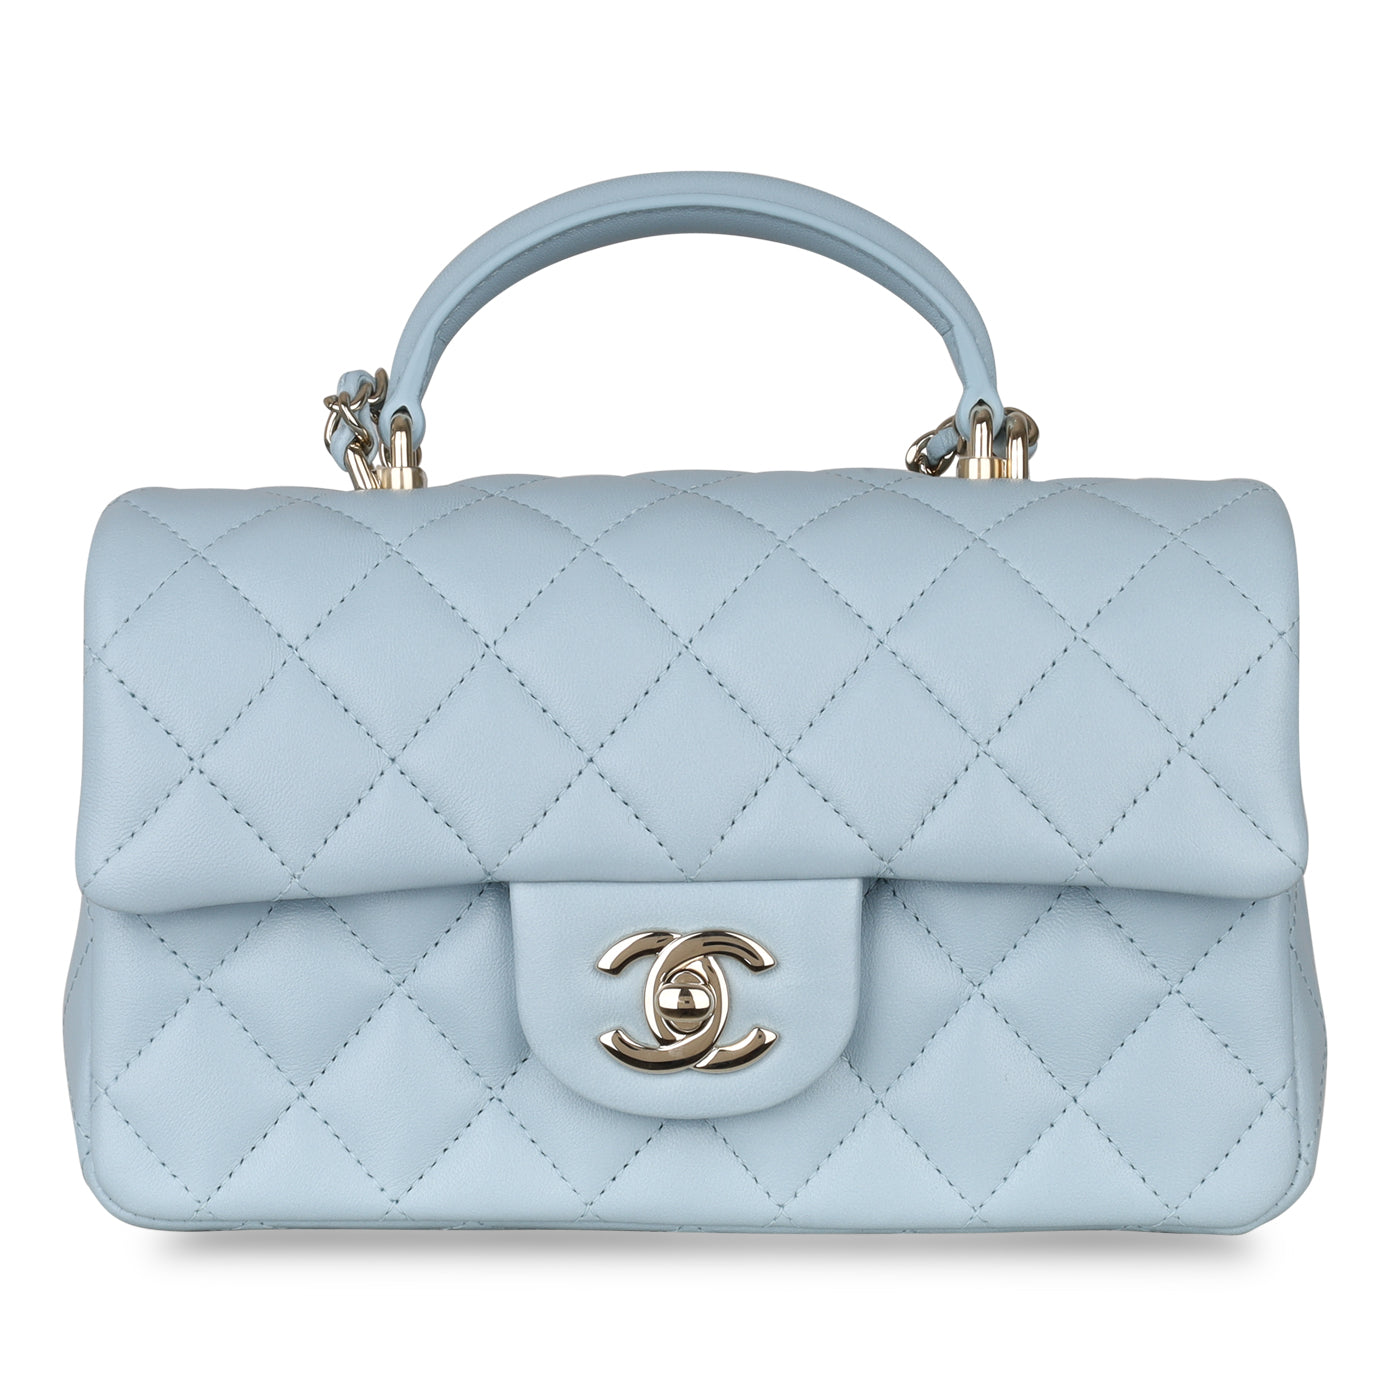 Chanel Lambskin Small Classic Double Flap Bag Blue  THE PURSE AFFAIR